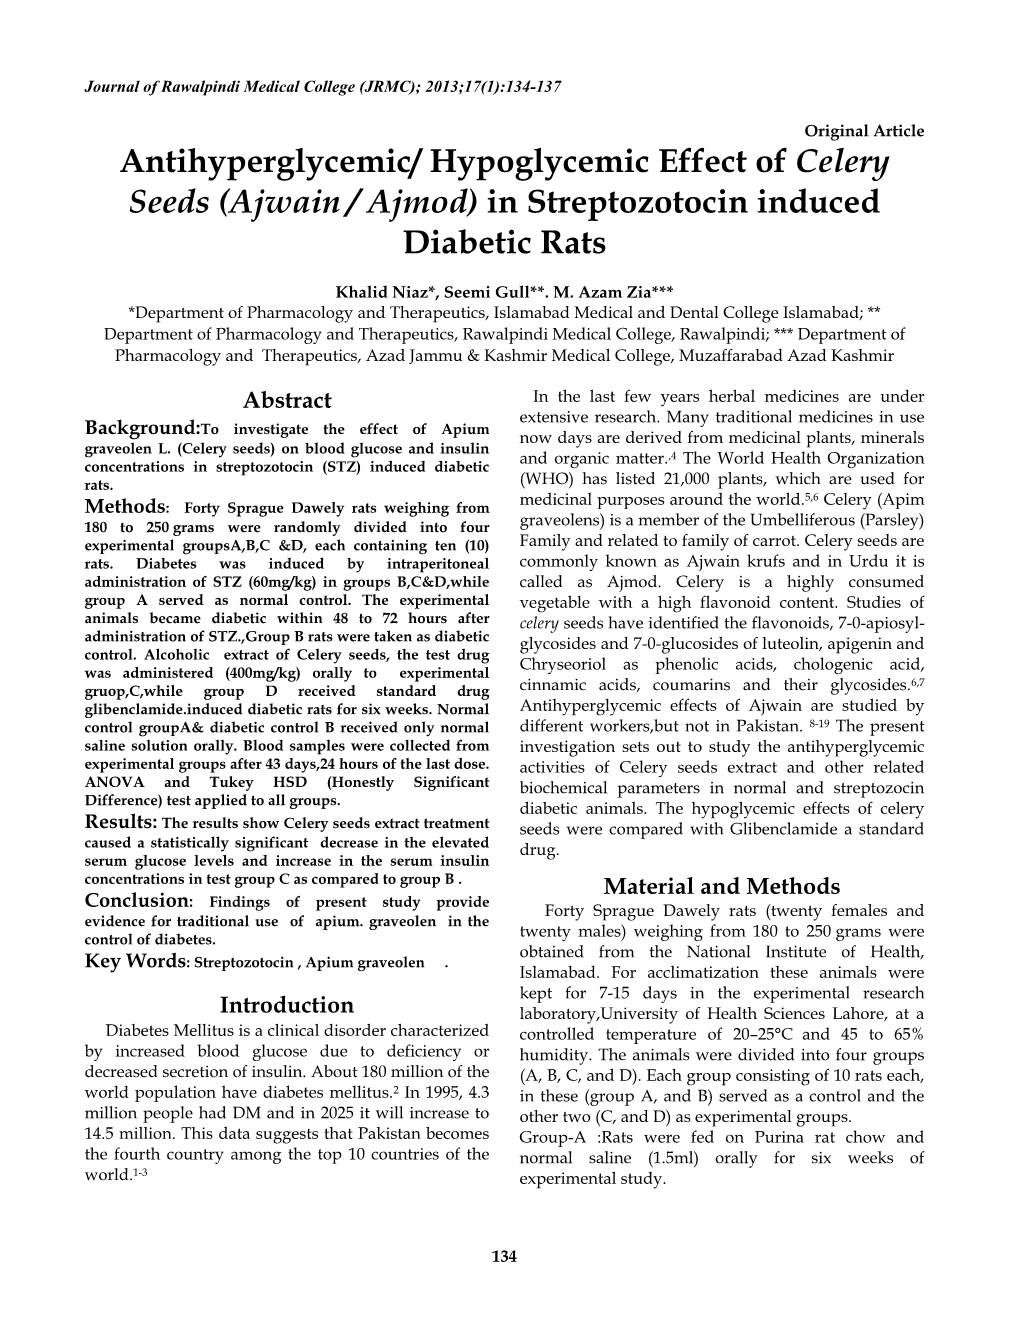 (Ajwain / Ajmod) in Streptozotocin Induced Diabetic Rats